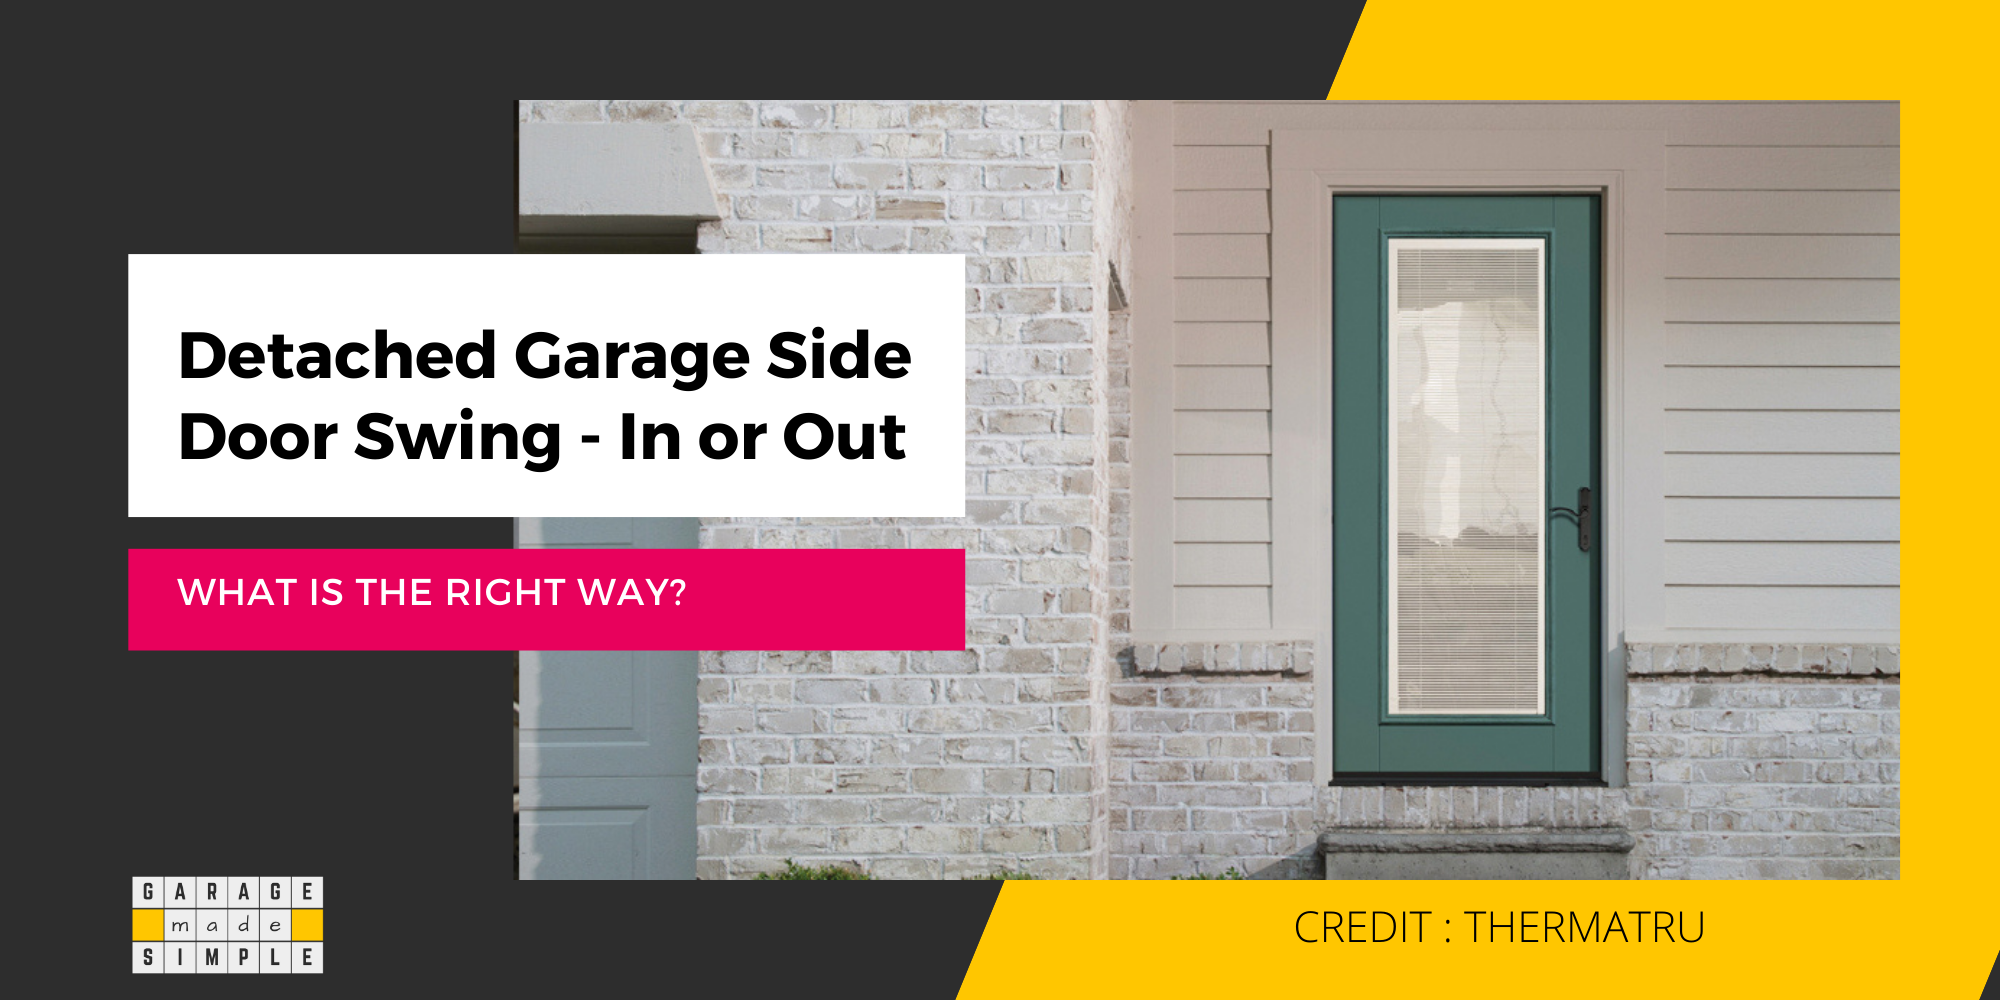 Detached Garage Side Door Swing: What Is the Right Way?